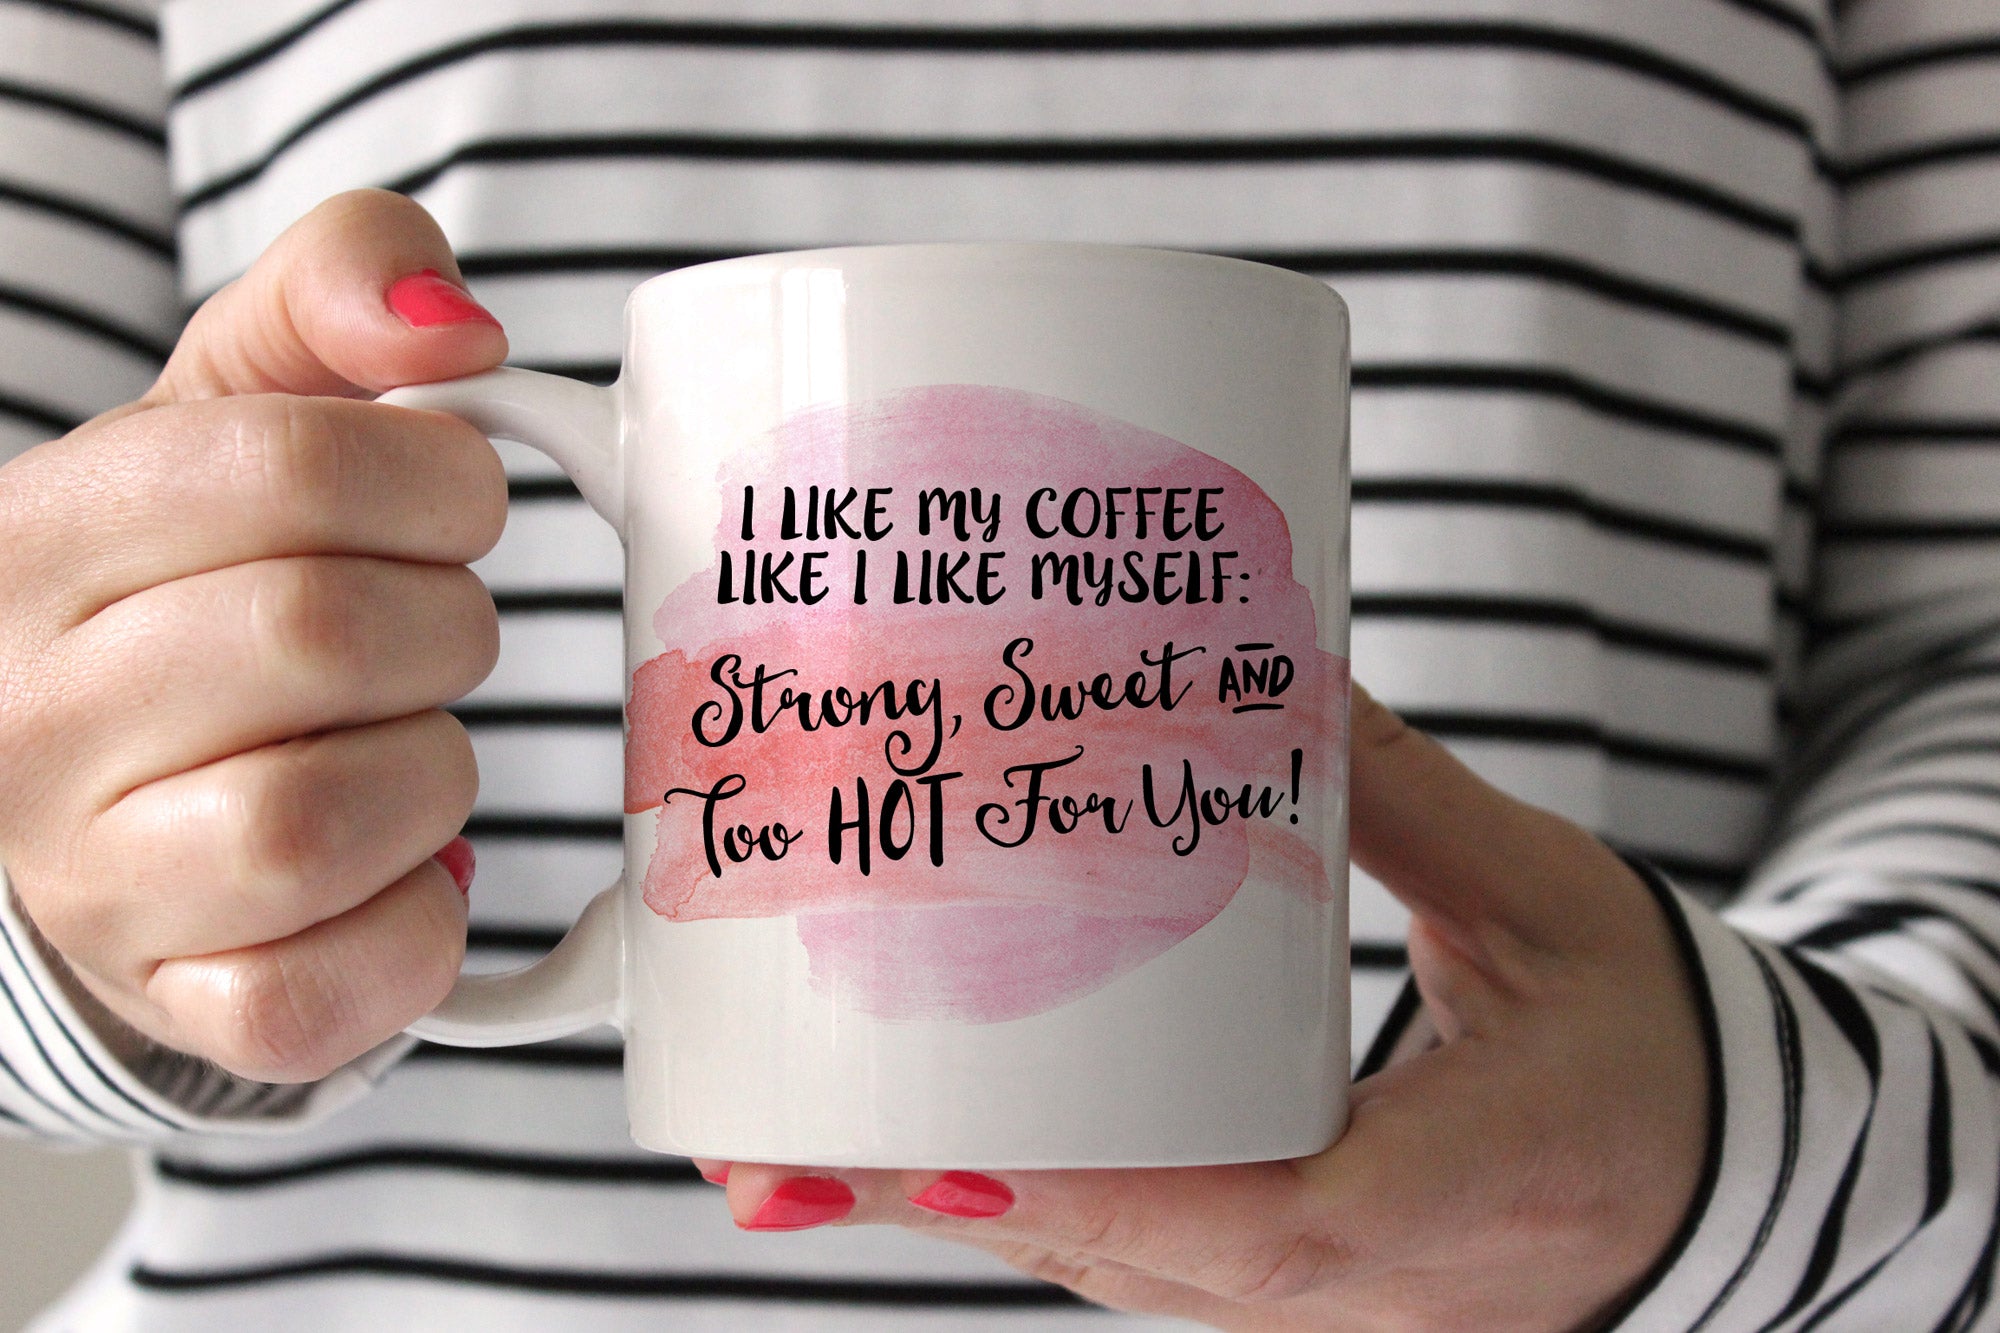 Funny mug: I like my coffee like I like myself: strong, sweet, and too hot for you!